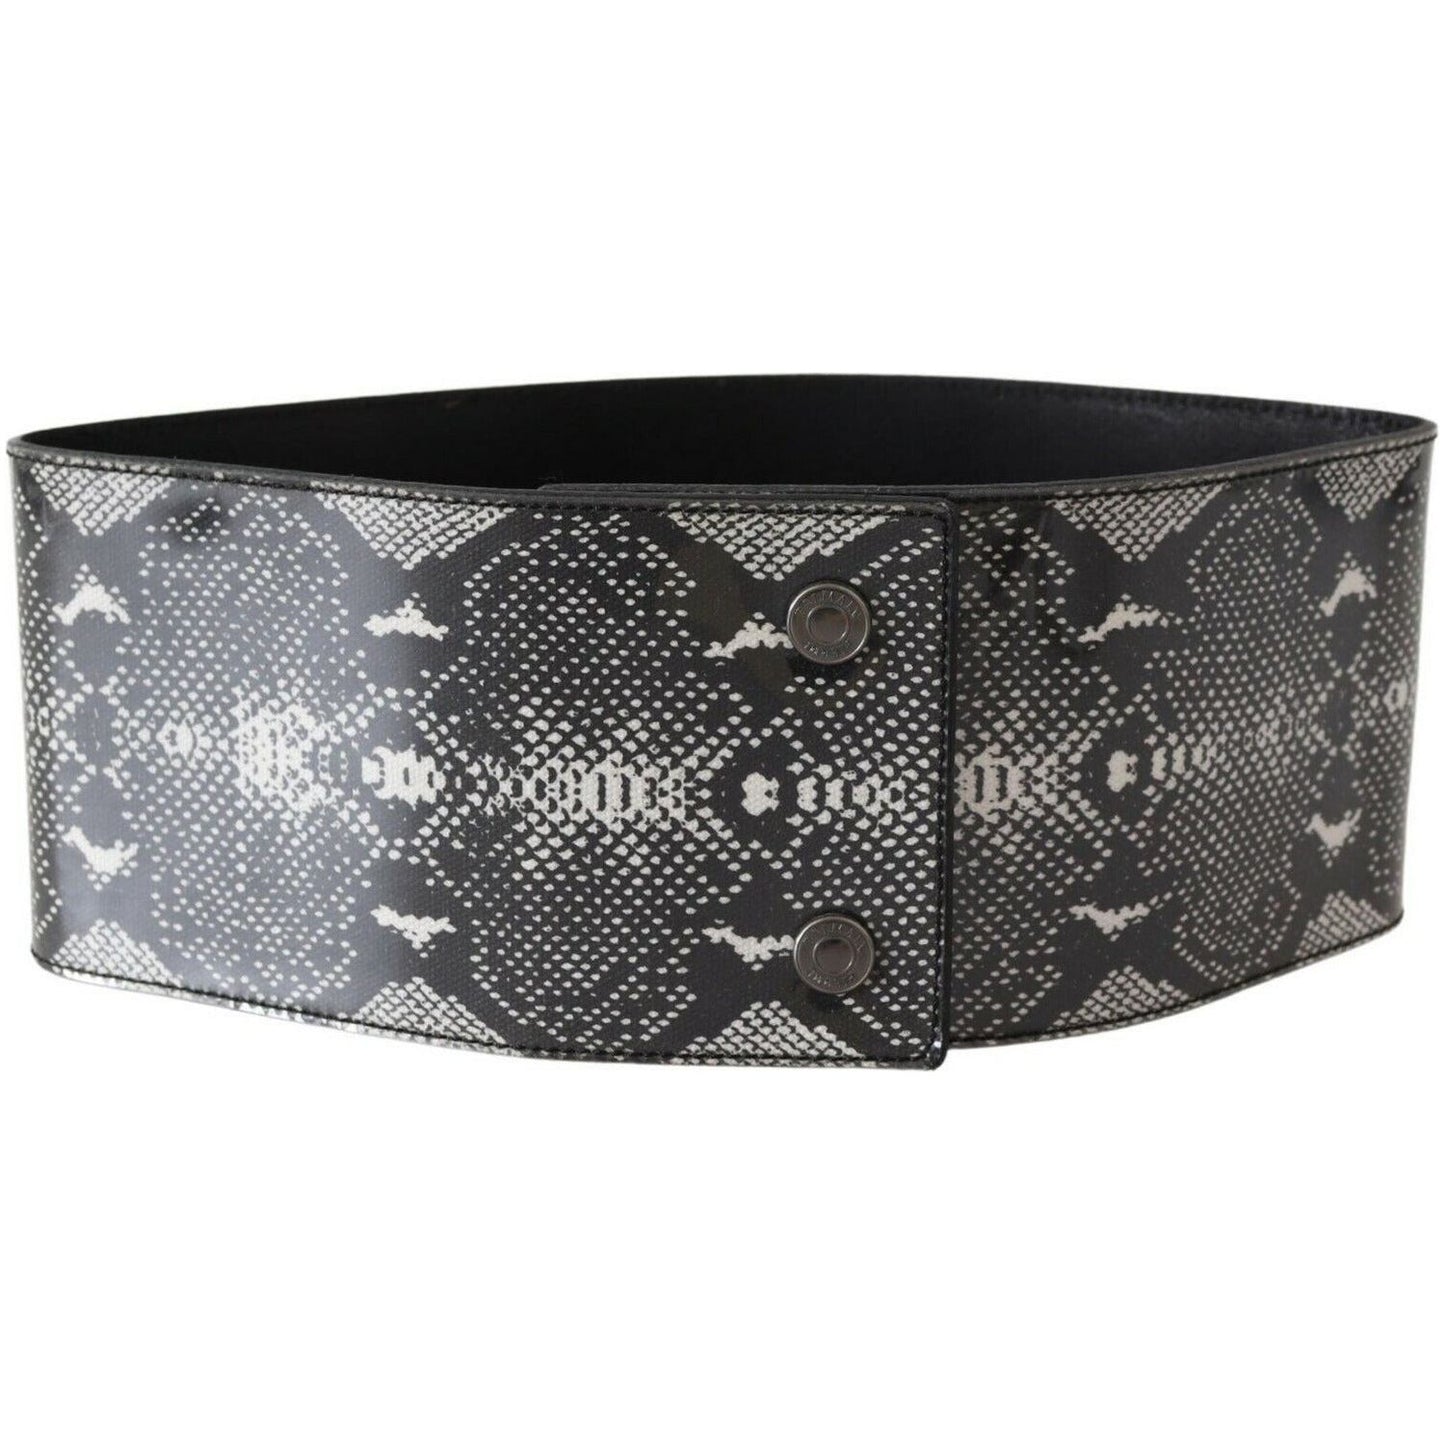 Ermanno Scervino Classic Snakeskin Motif Leather Belt black-wide-leather-snakeskin-design-waist-belt WOMAN BELTS s-l1600-2022-08-18T114456.209-c04ce8c3-39a.jpg